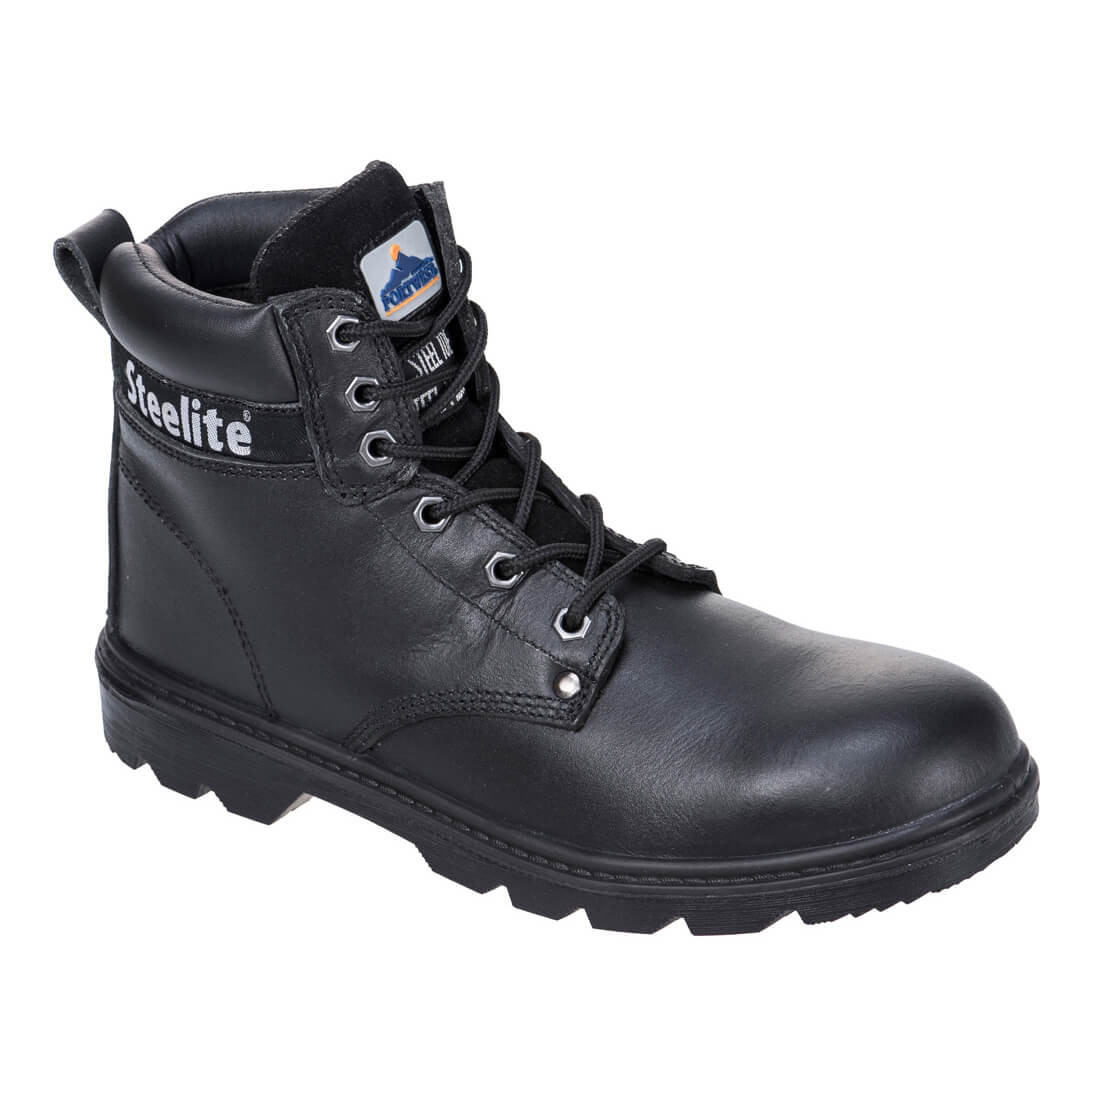 Ghete Steelite™ Thor S3 - Incaltaminte de protectie | Bocanci, Pantofi, Sandale, Cizme